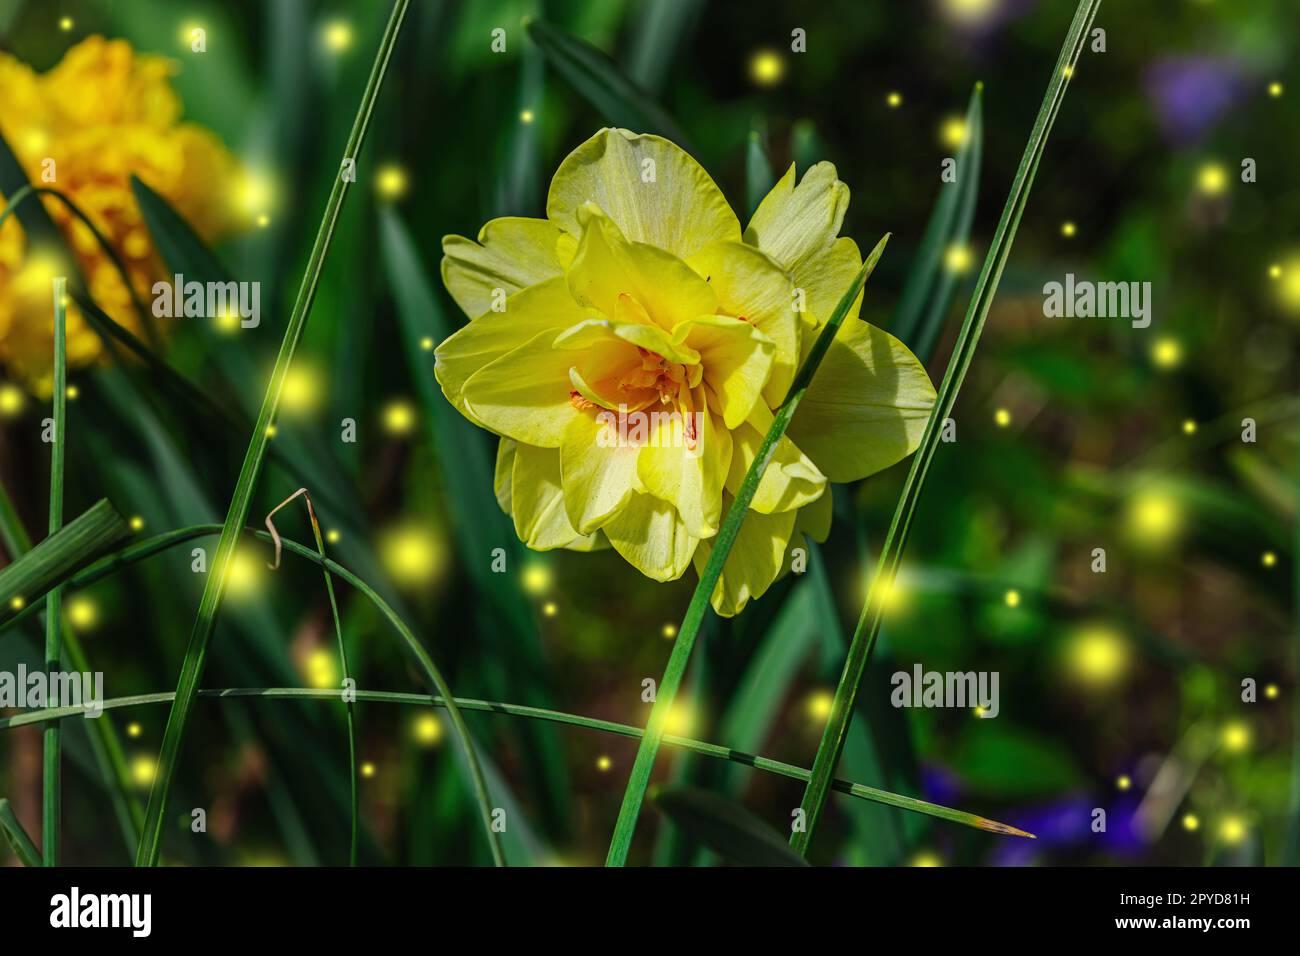 Blooming Daffodils Grow In The Garden Spring Gardening Outdoor